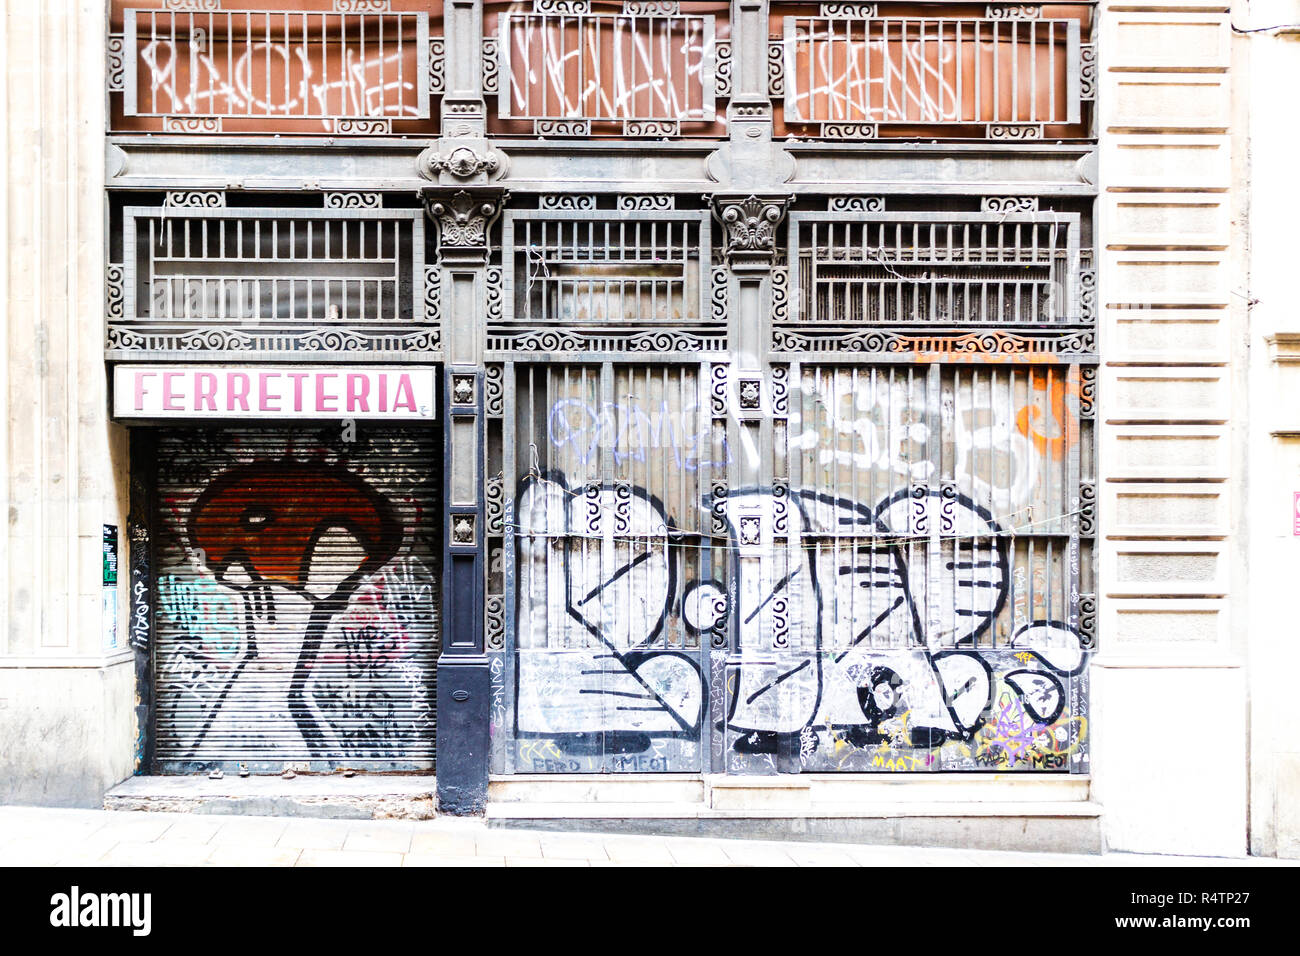 Graffiti on a closed Ferreteria or hardware store, Barcelona, Spain Stock  Photo - Alamy